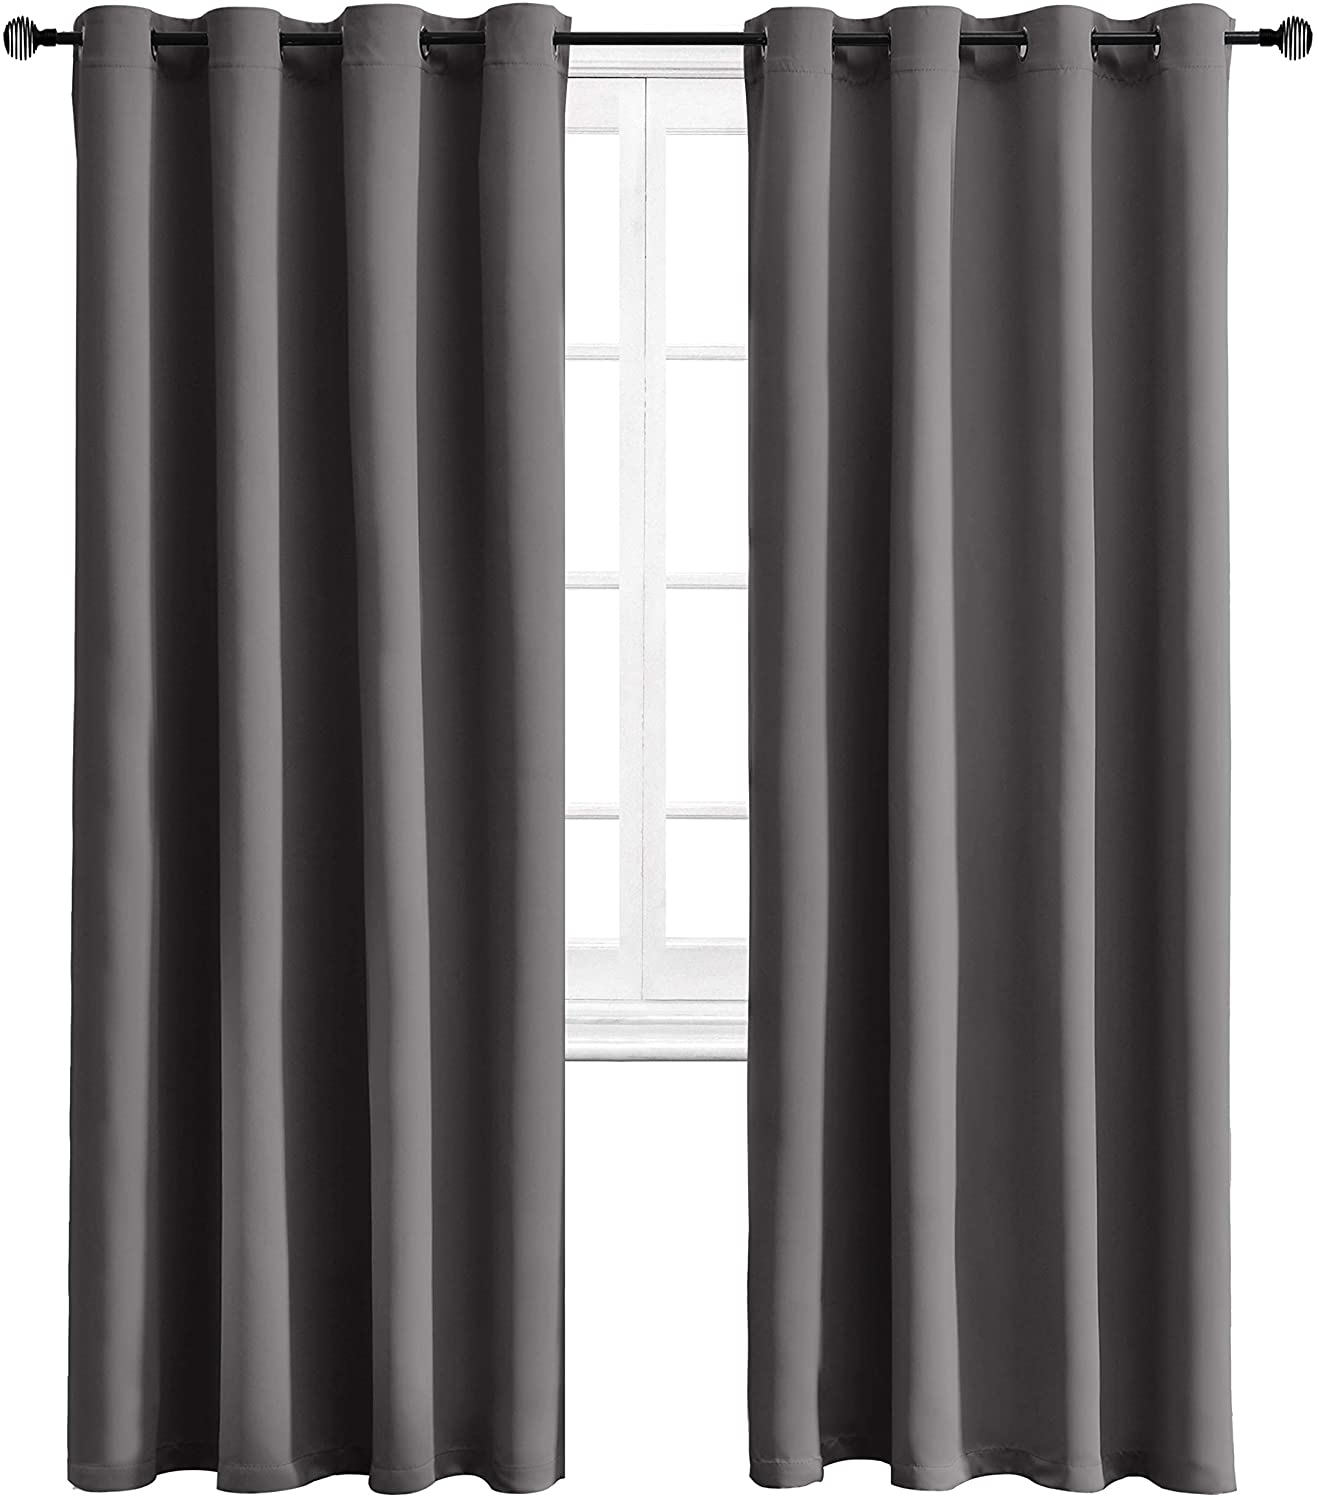 WONTEX Triple Weave Fabric Soundproof Curtains